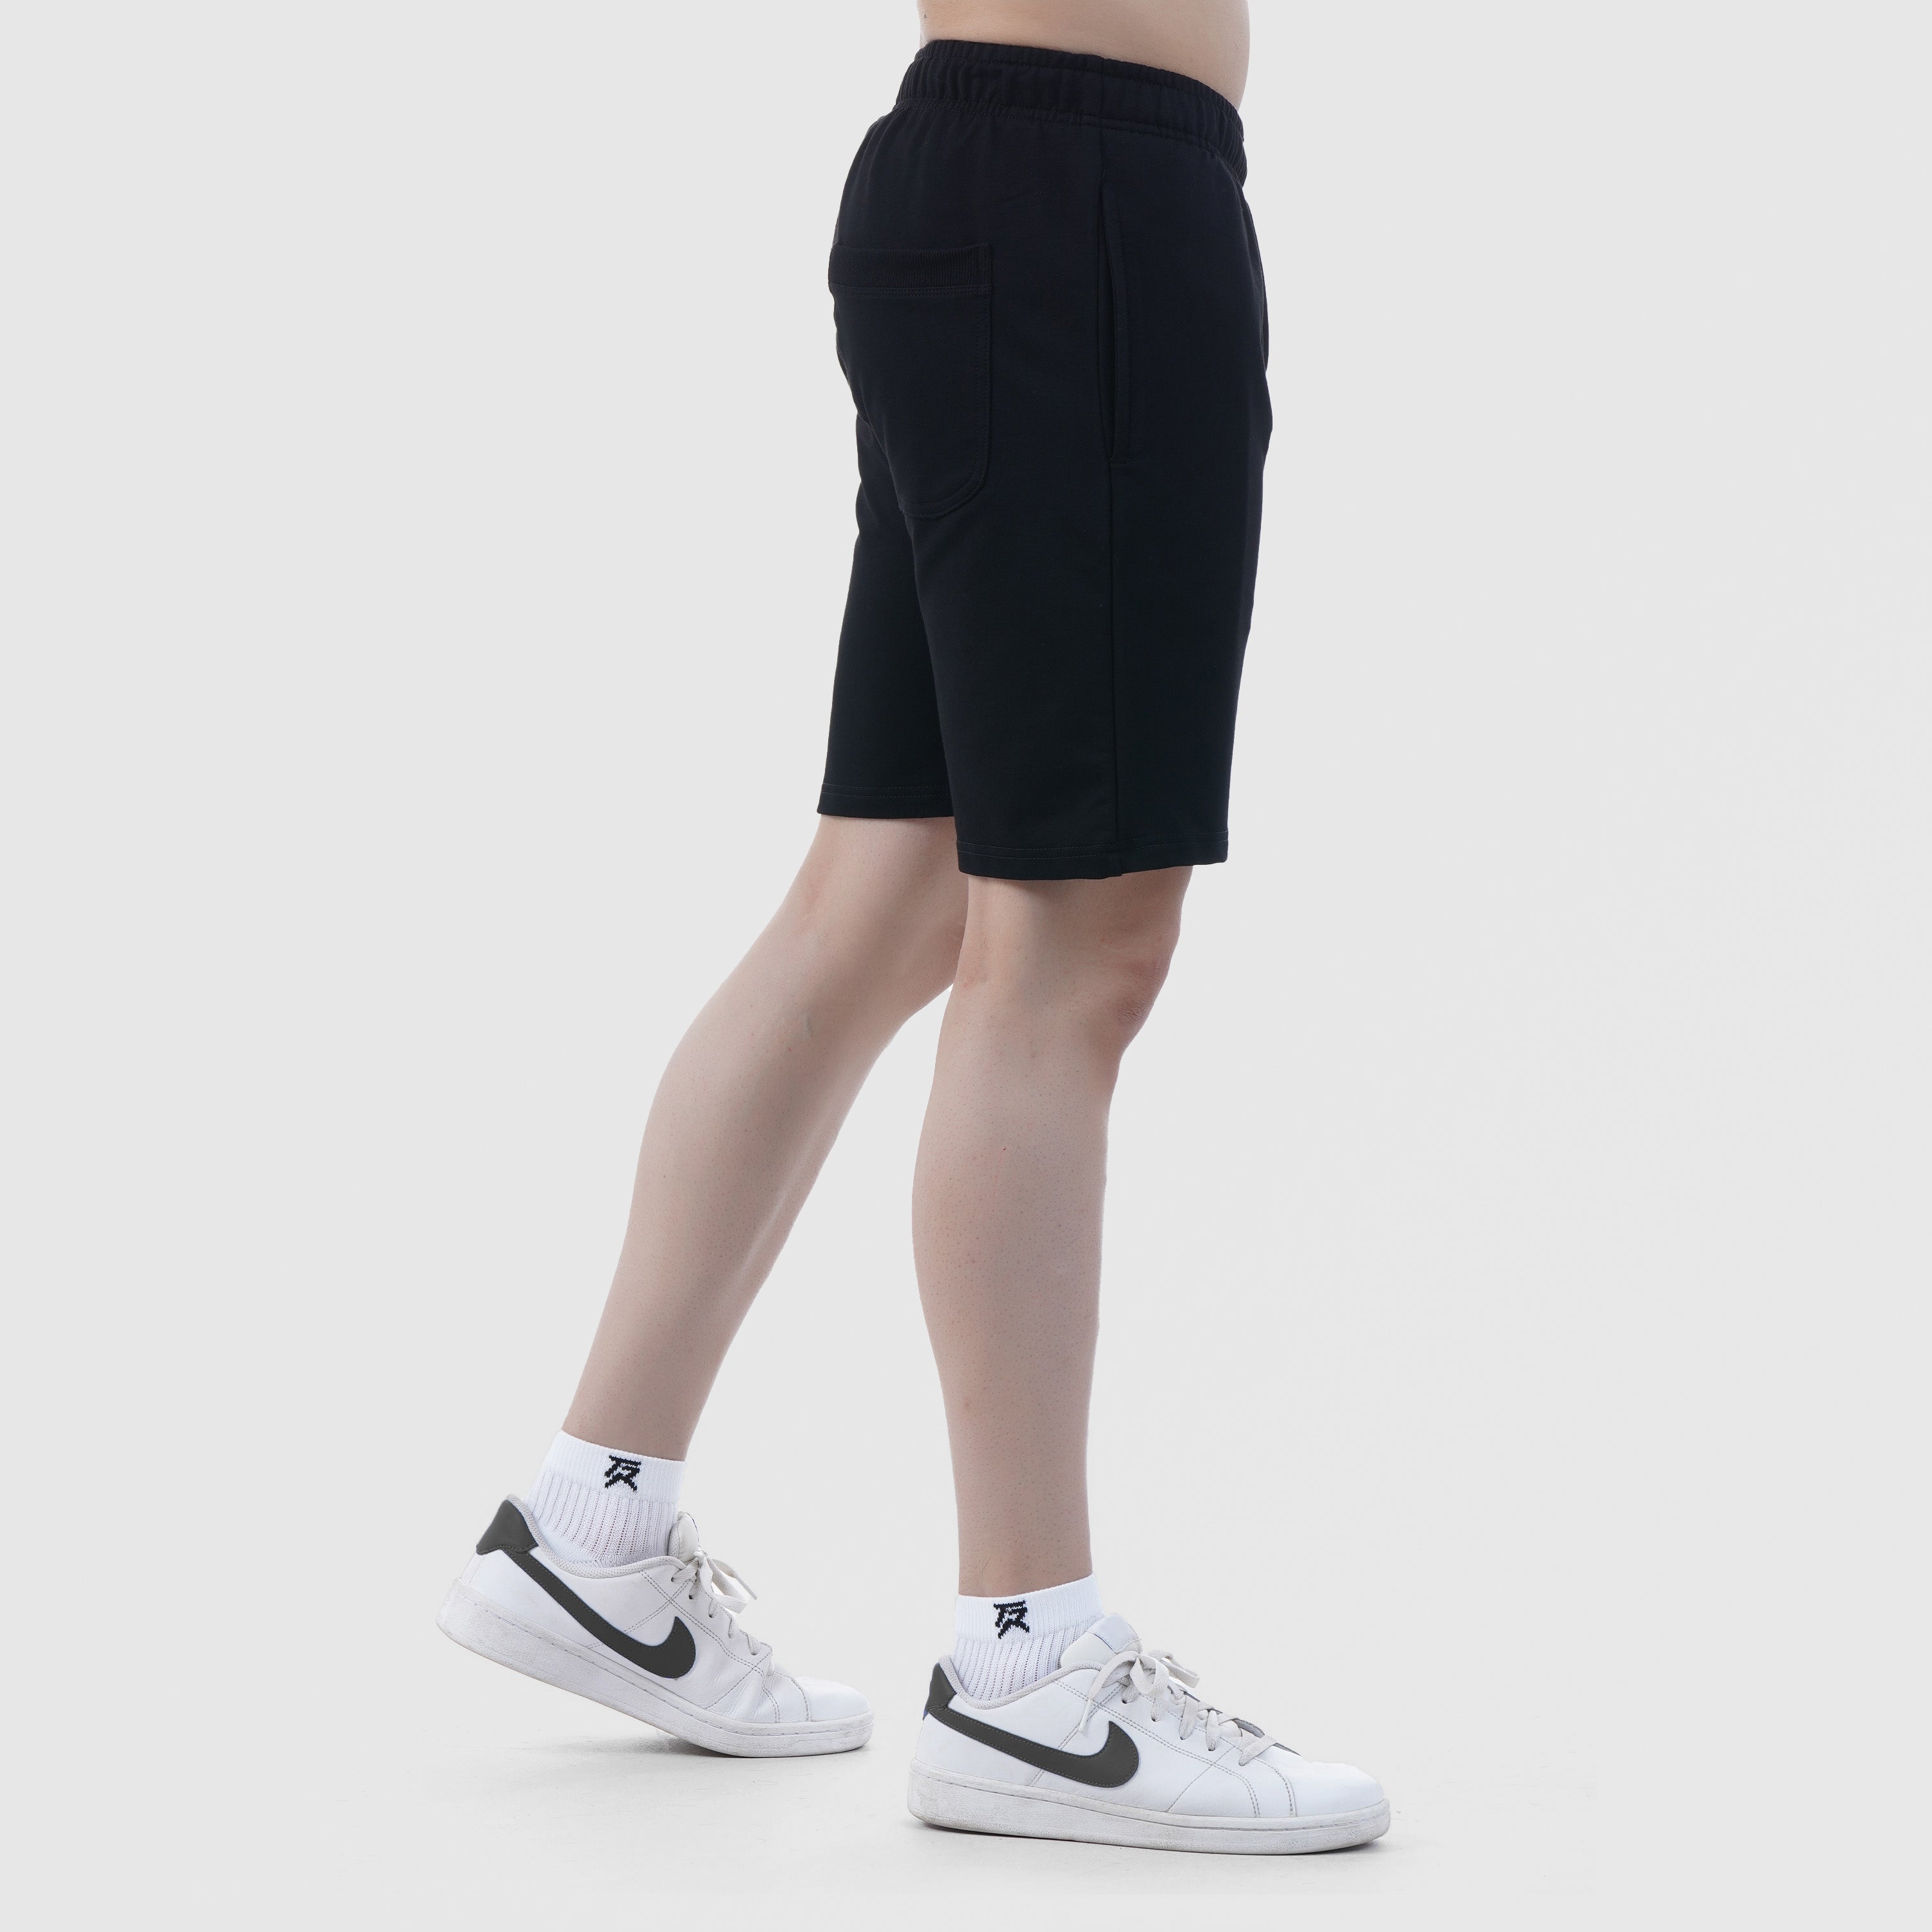 QuickMove Shorts (Black)